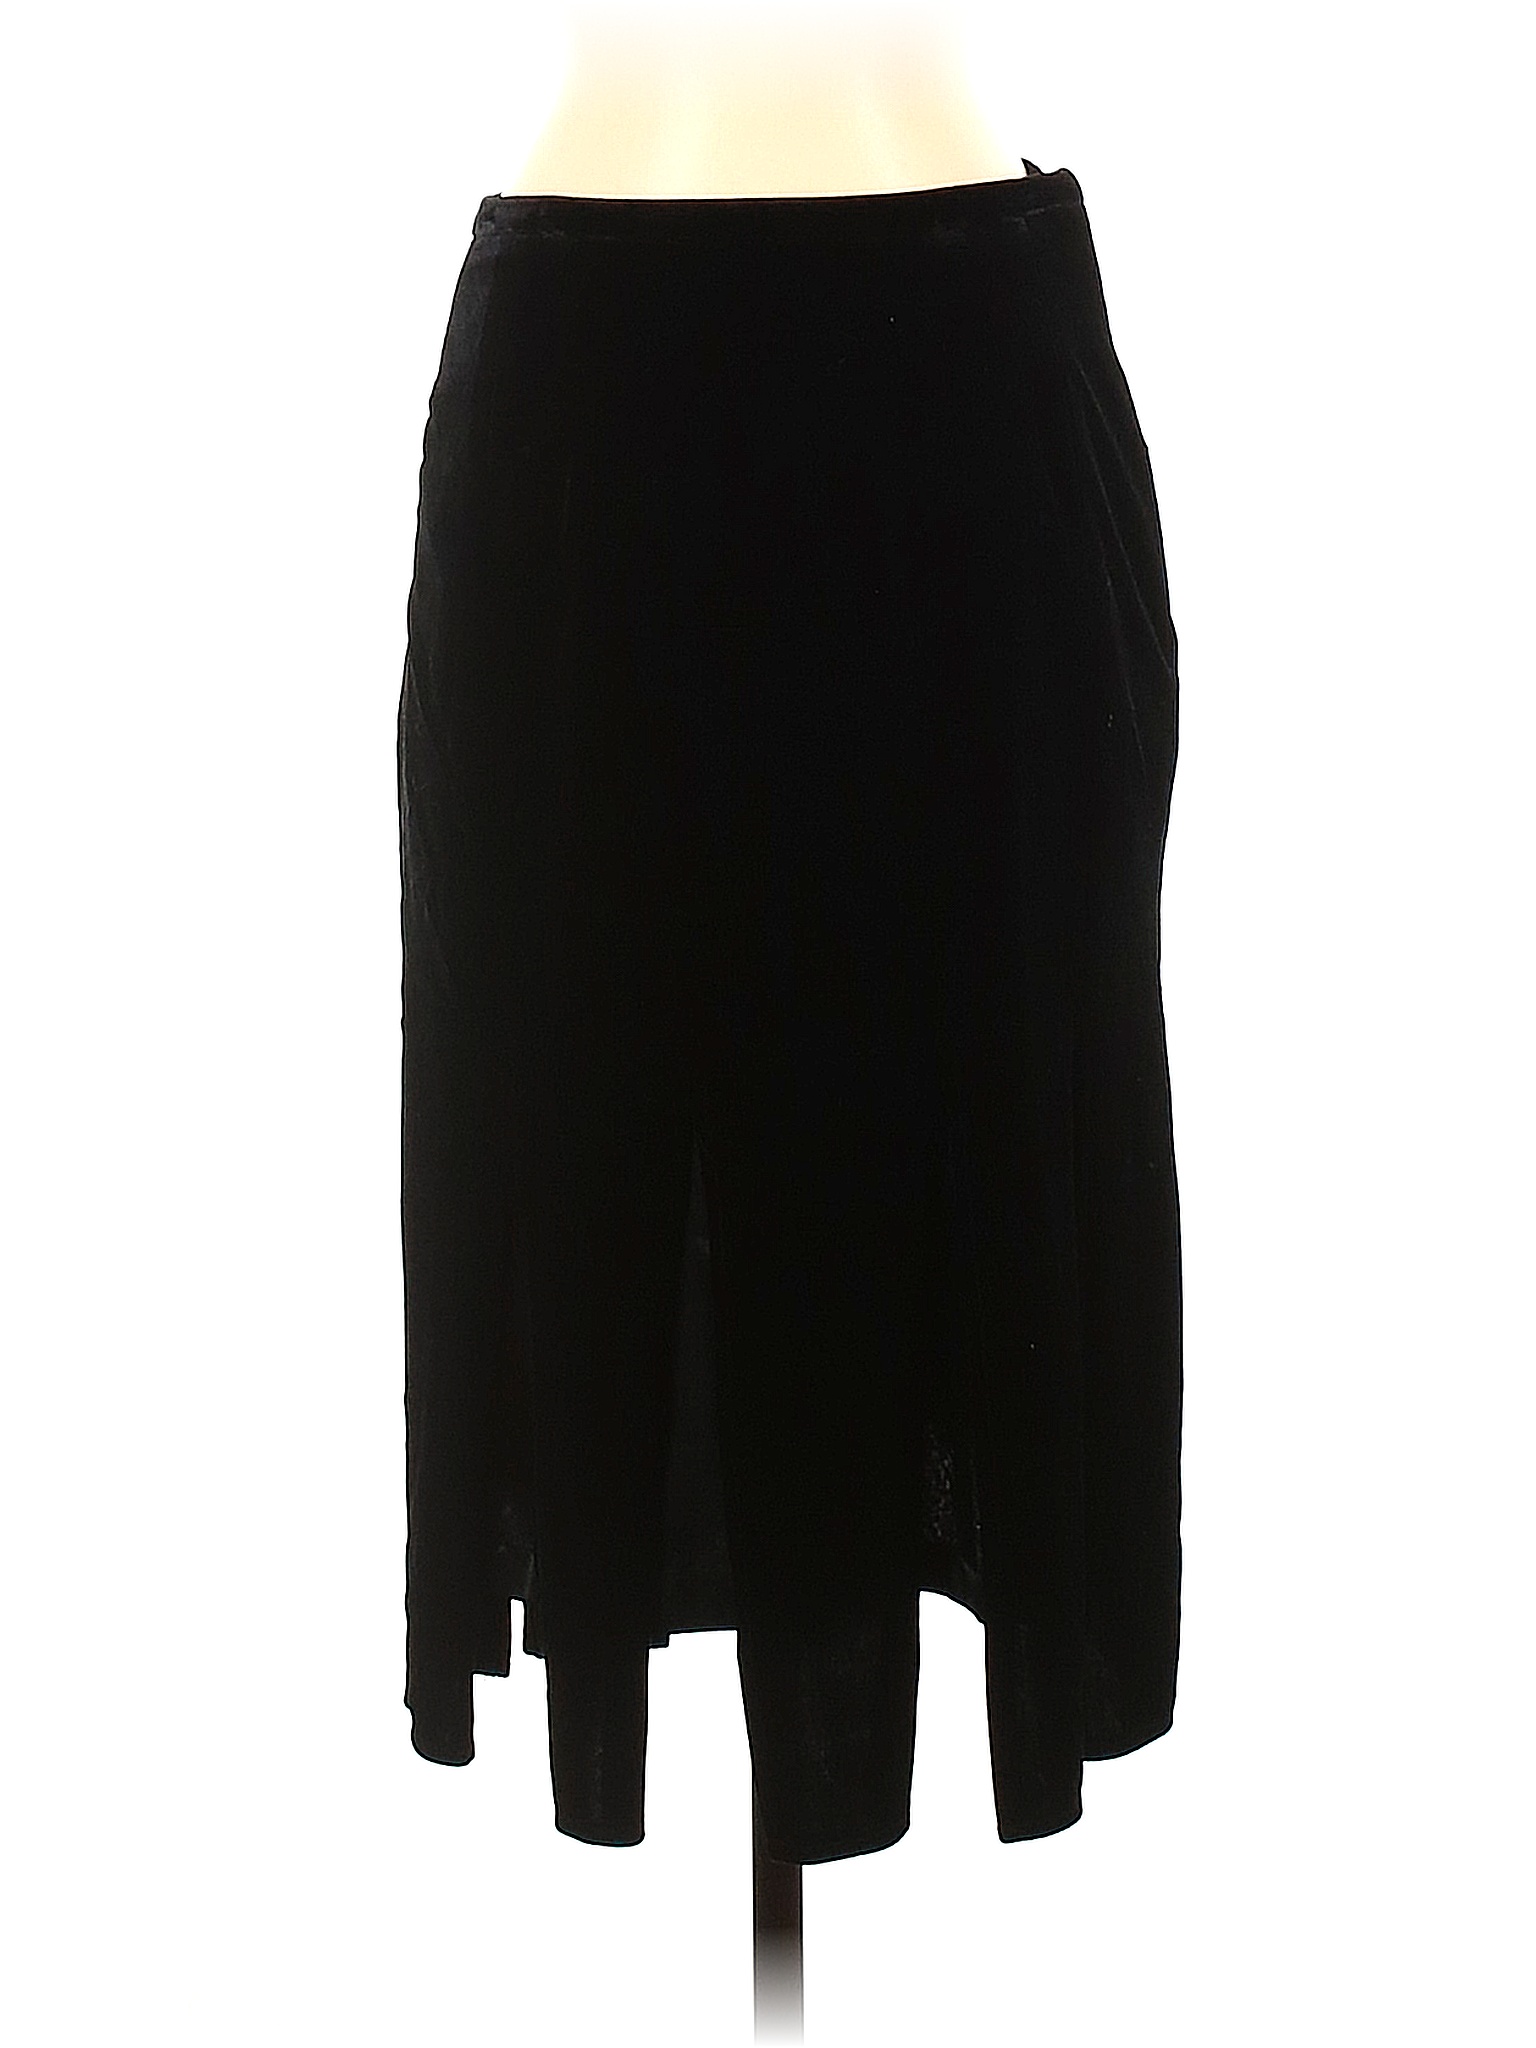 R&K Evening Women Black Casual Skirt S